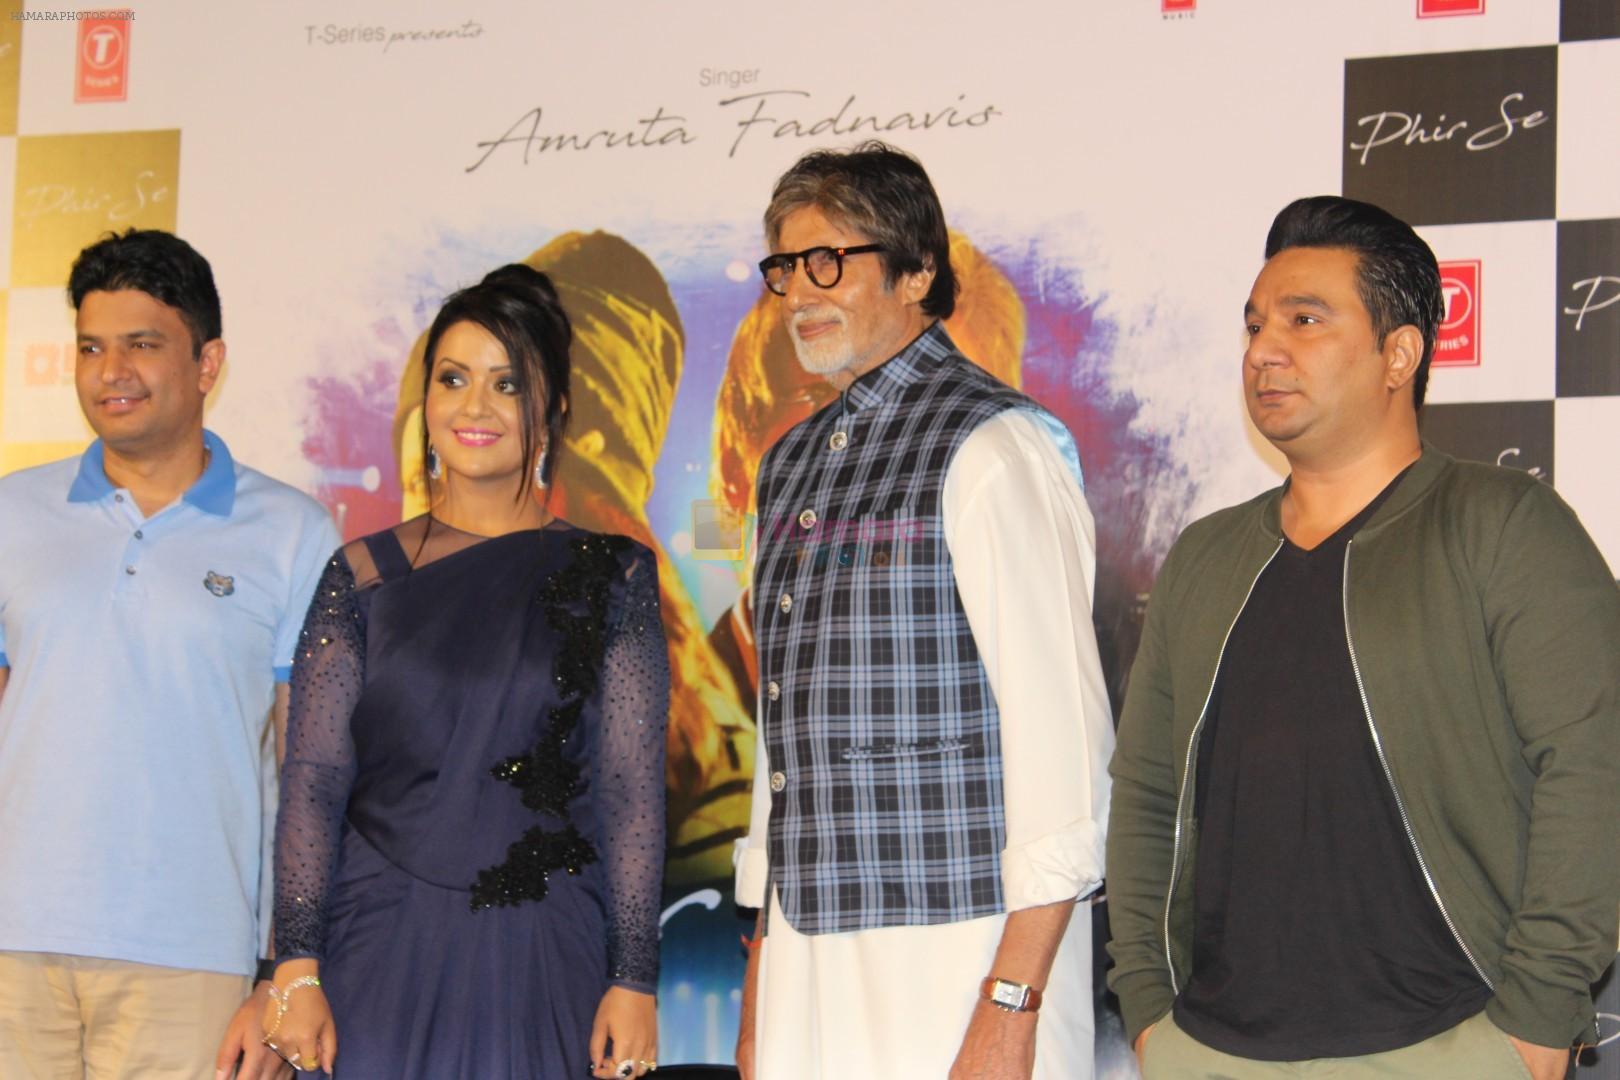 Amitabh Bachchan at Amruta Fadnavis's new song Phir Se on 31st May 2017